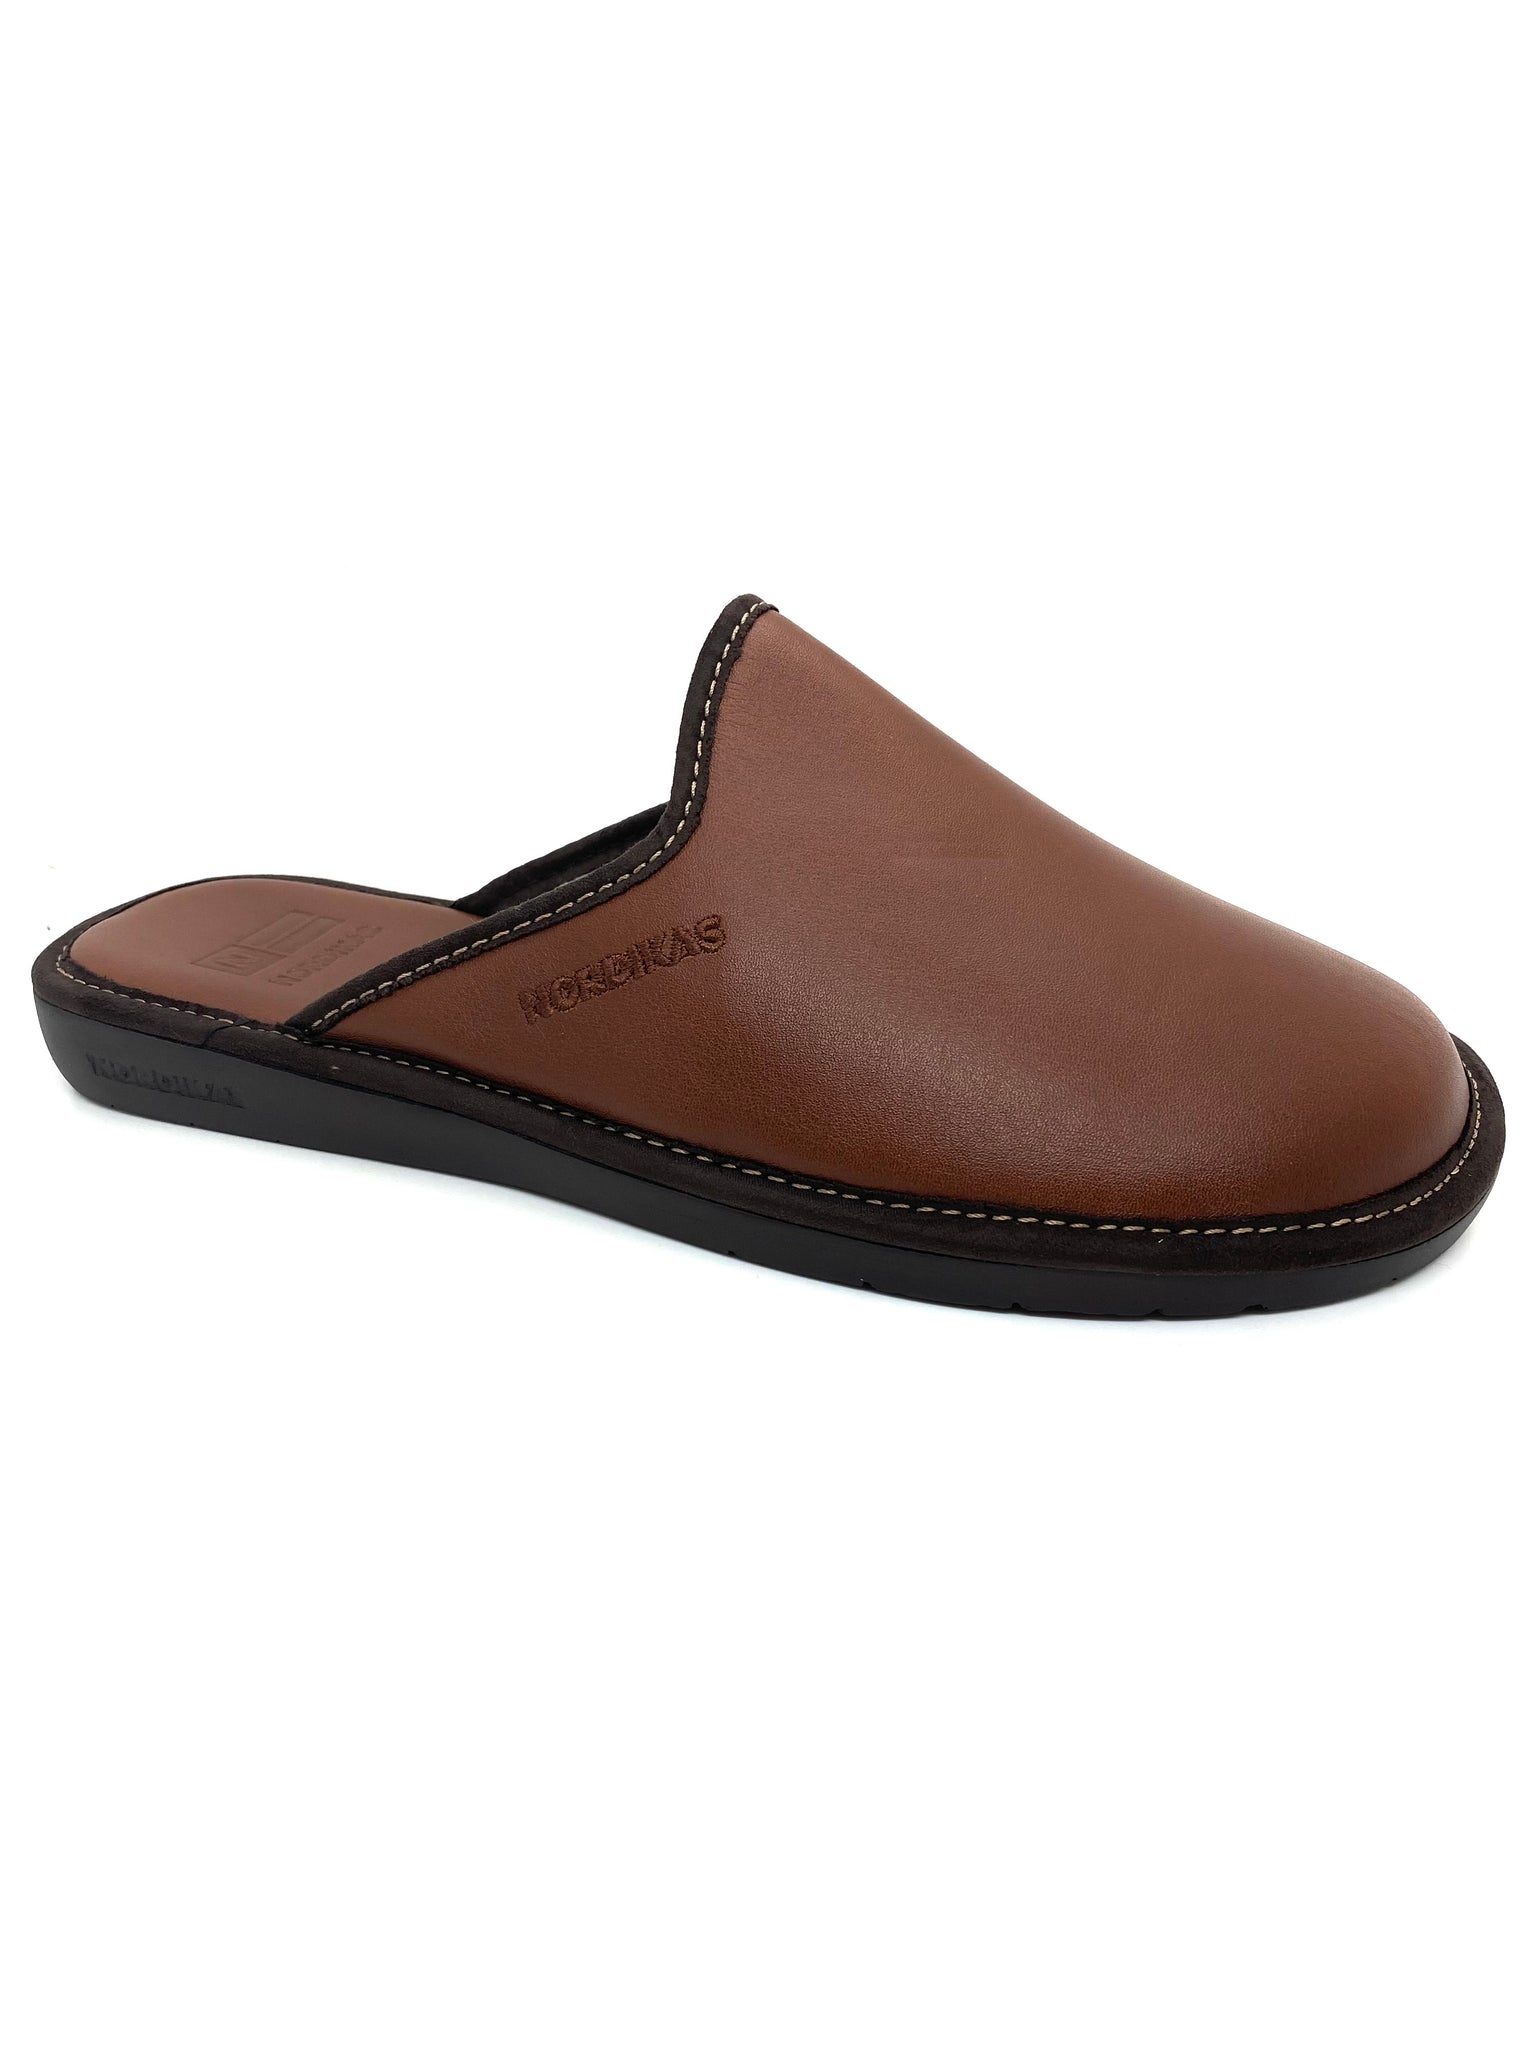 Nordikas Men's Backless Leather House Shoe